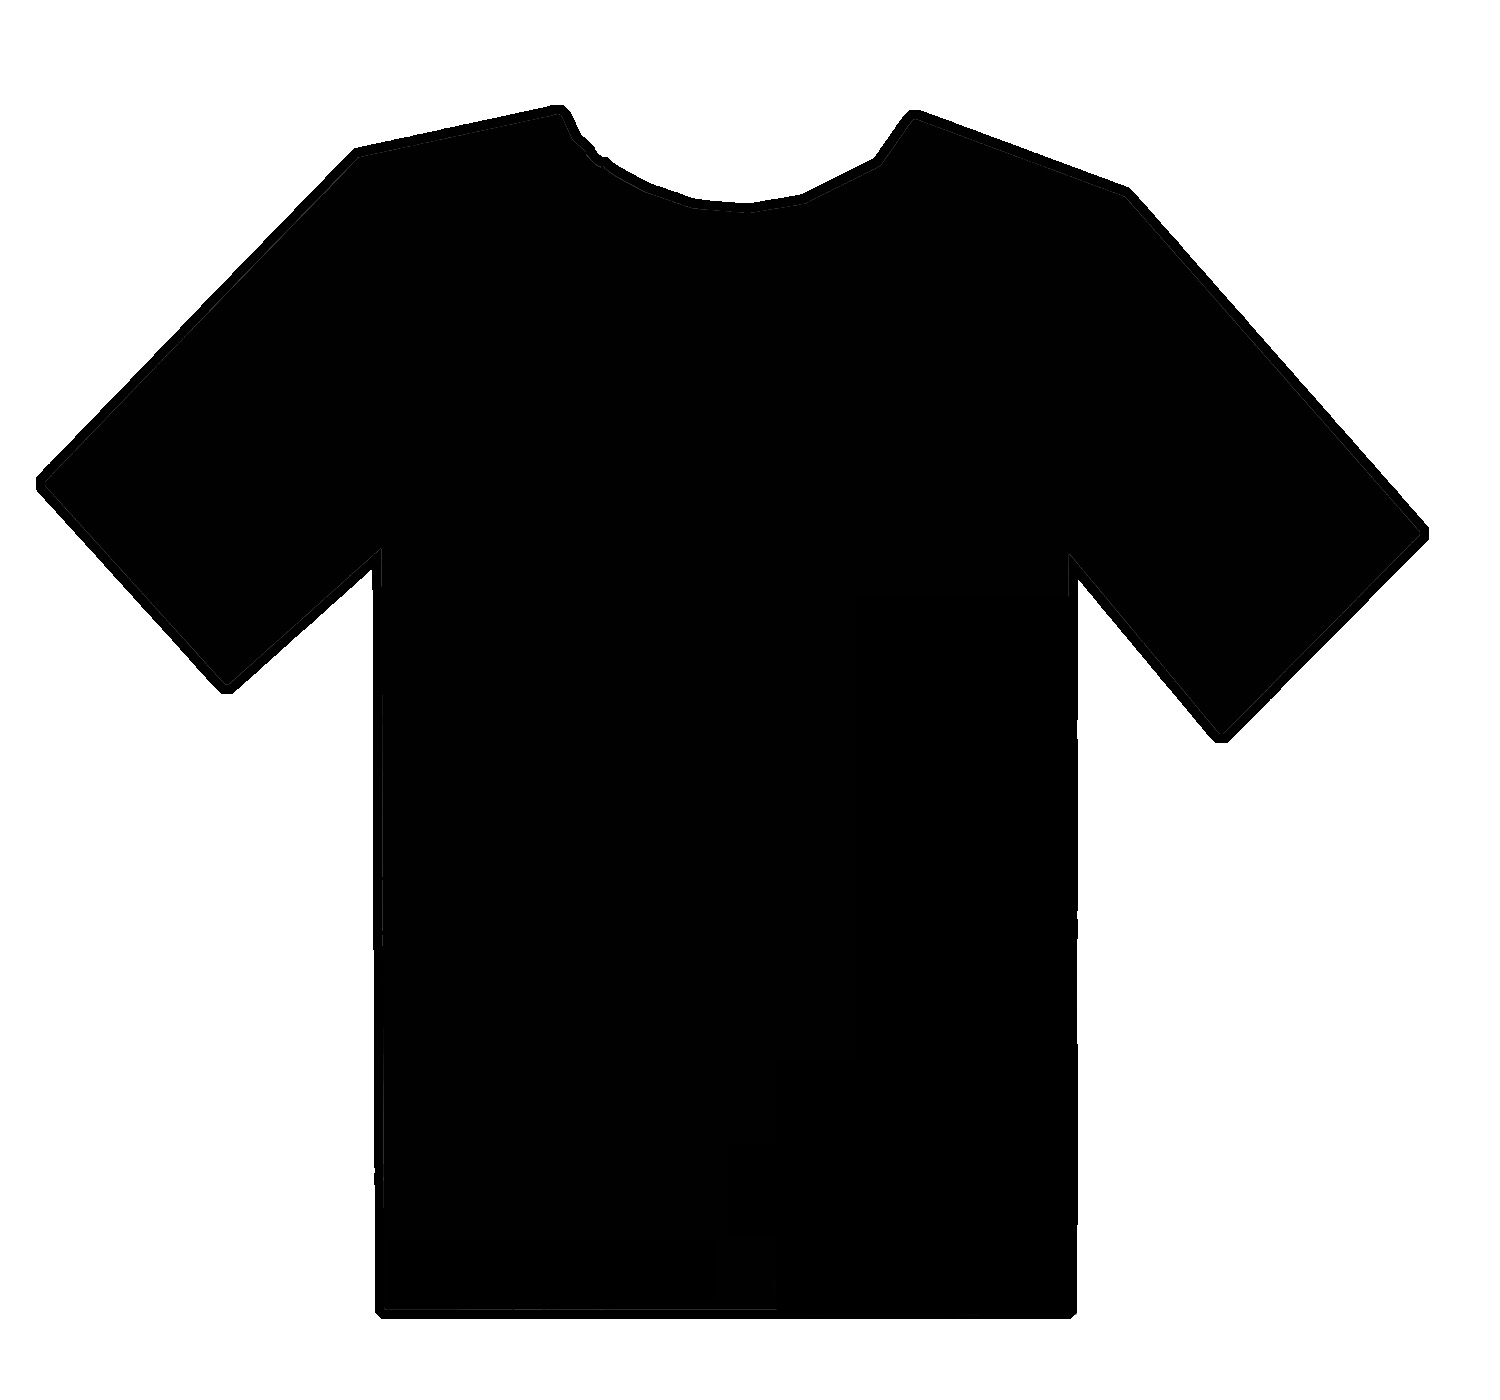 Best Photos of Blank Vector Tee Shirts - Blank T-Shirt Template ...